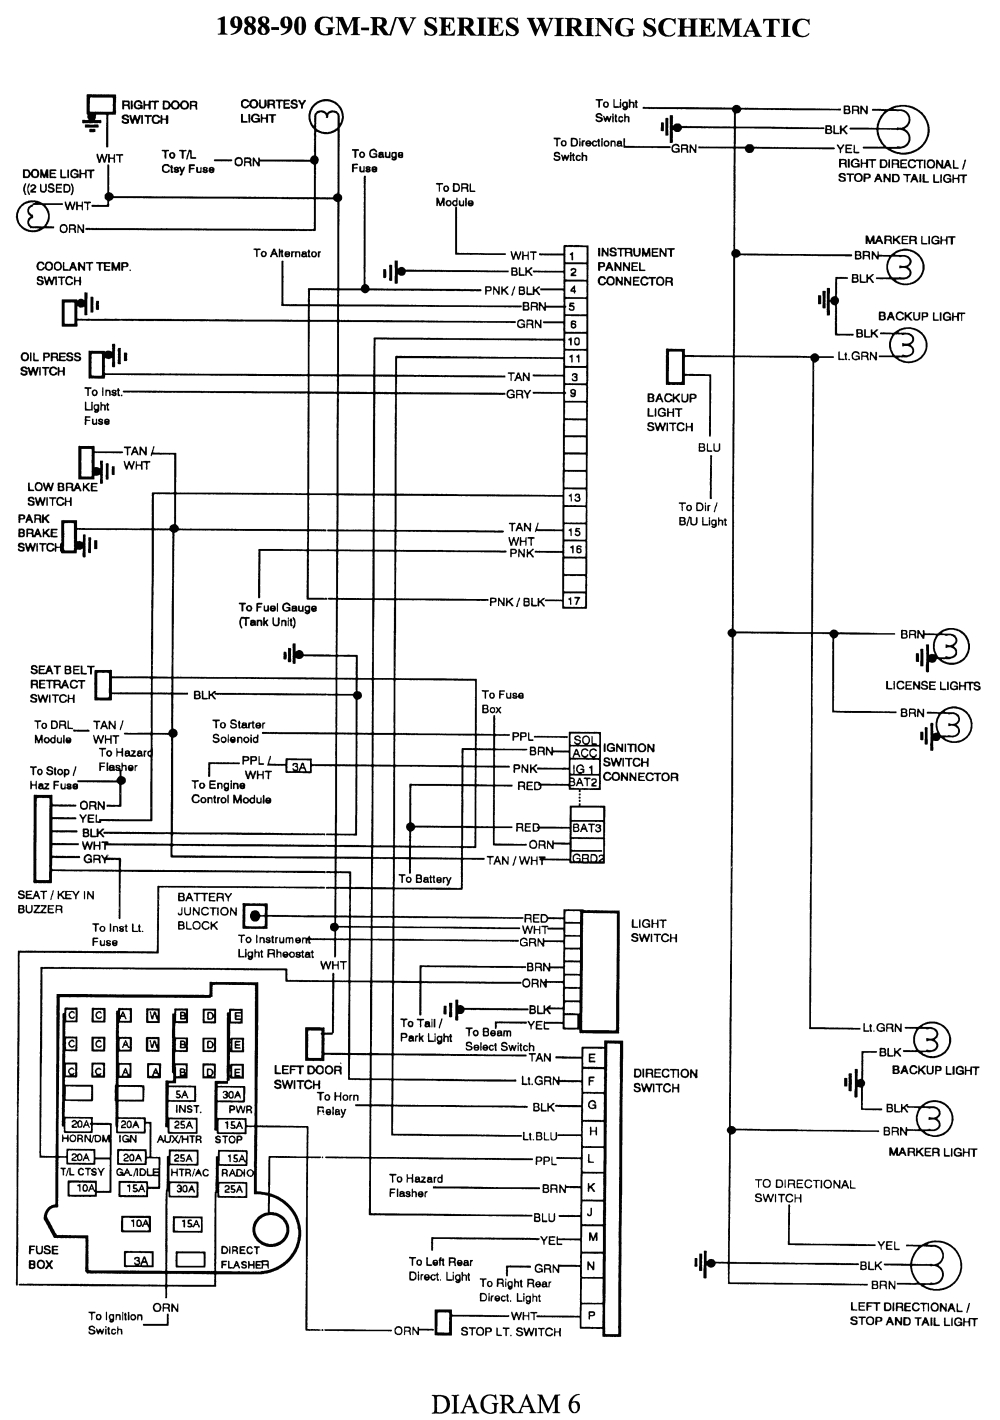 repair guides wiring diagrams wiring diagrams autozone com 98 gmc tail light wiring diagram 98 gmc wiring diagram